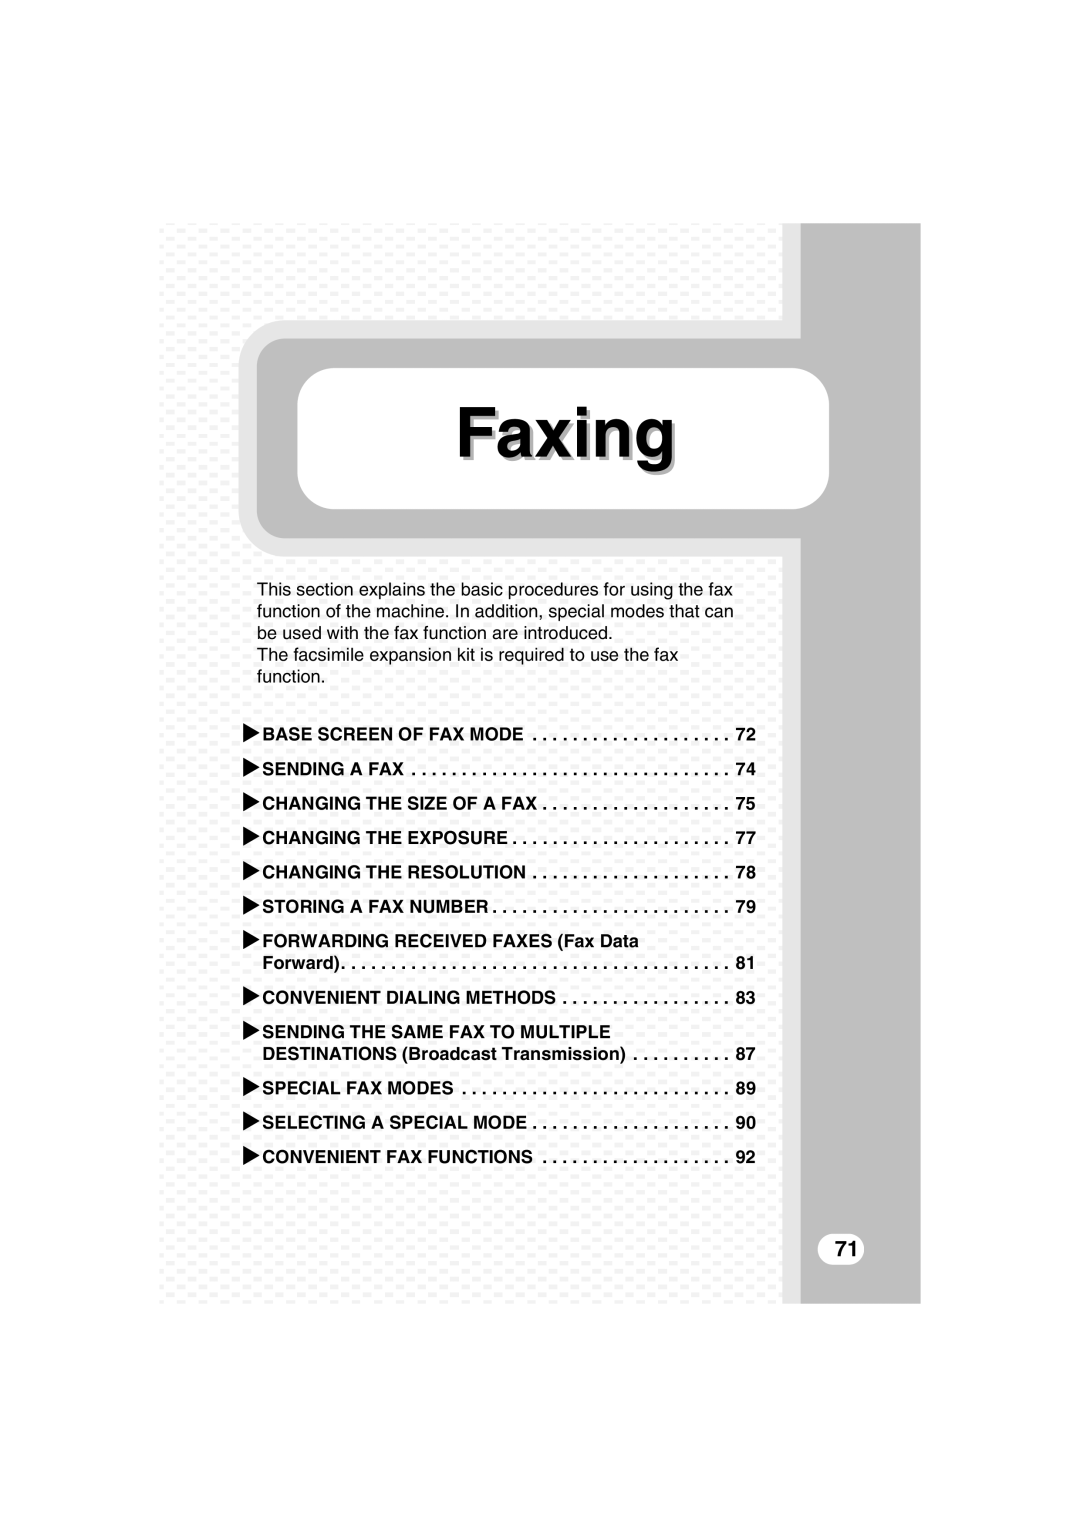 Sharp TINSE4377FCZZ, MX-B401 quick start Faxing, Xbase Screen Of Fax Mode Xsending A Fax Xchanging The Size Of A Fax 